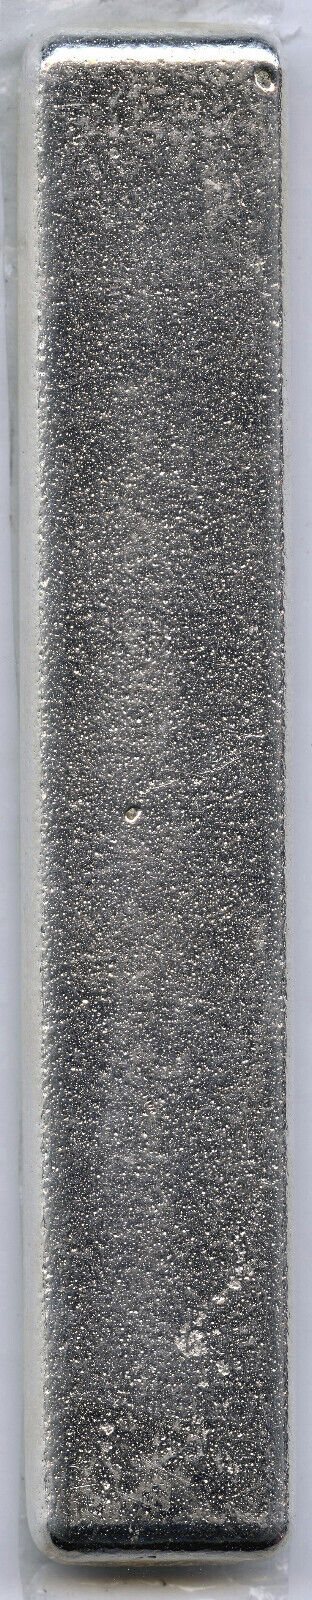 Lucky Dragon 999 Silver 8.88 oz Troy Scottsdale Mint Bullion Art Bar Medal G919